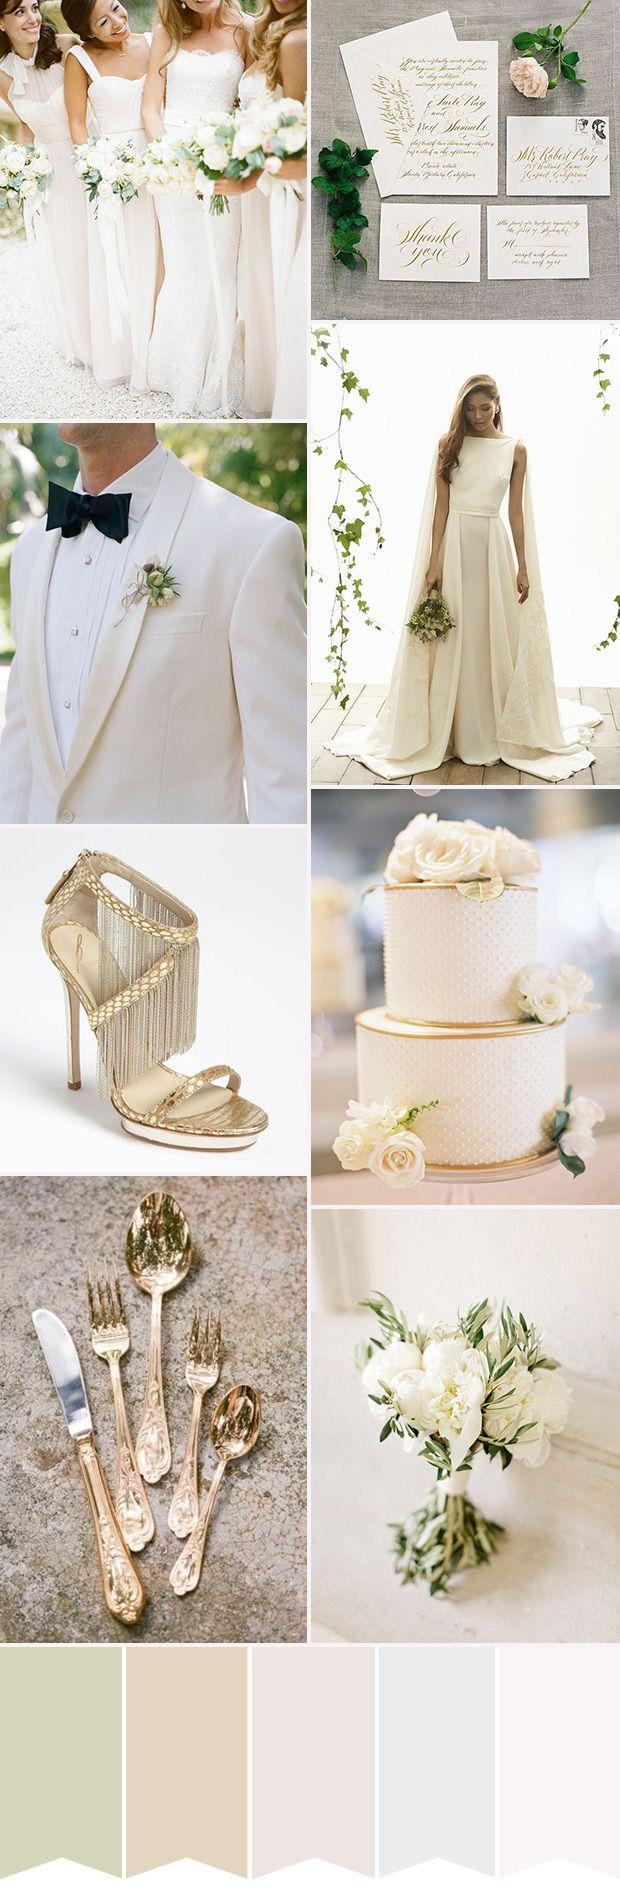 Hochzeit - The Ultimate Glam: White Wedding Inspiration